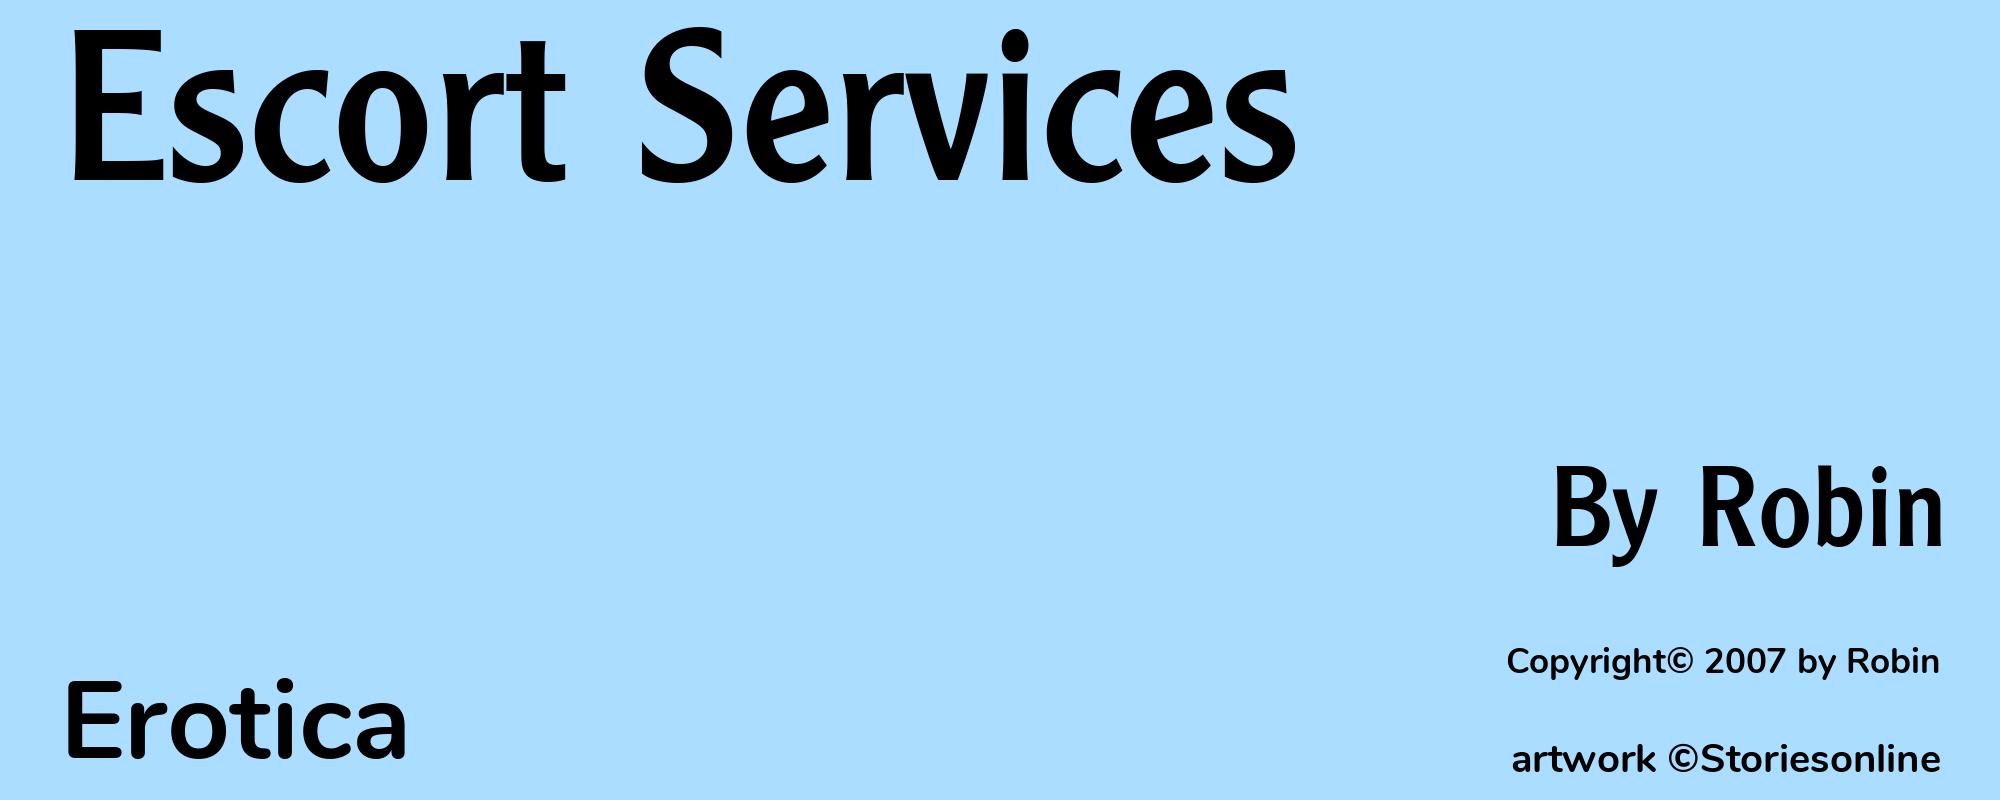 Escort Services - Cover